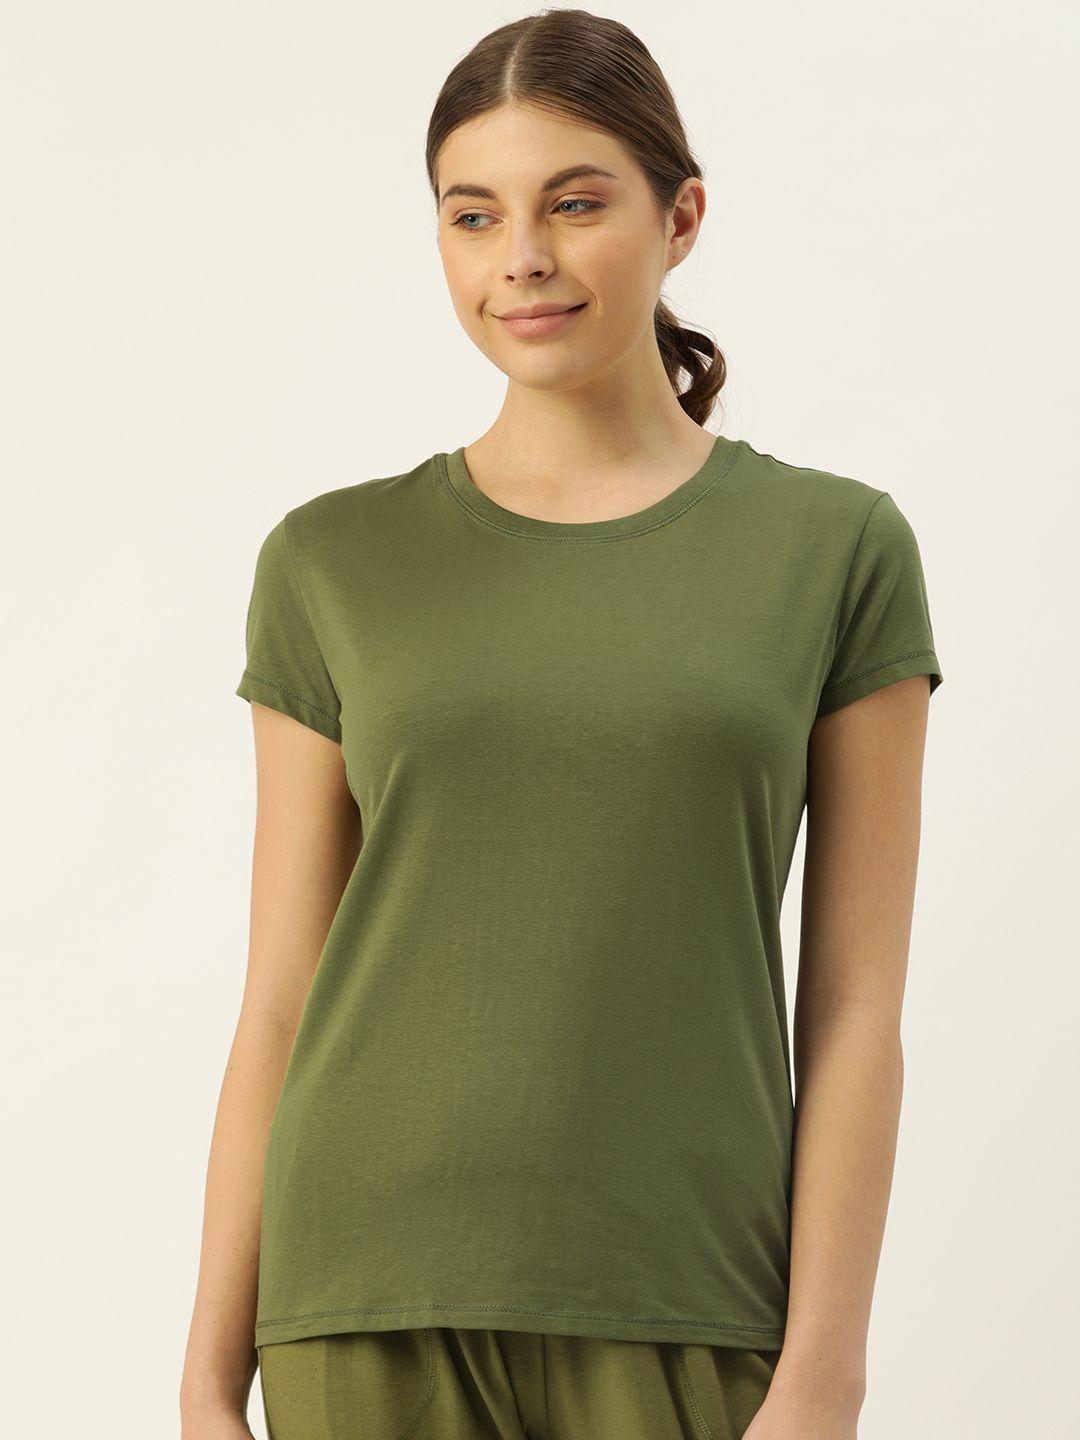 enamor-women-olive-green-slim-fit-crew-round-neck-t-shirt